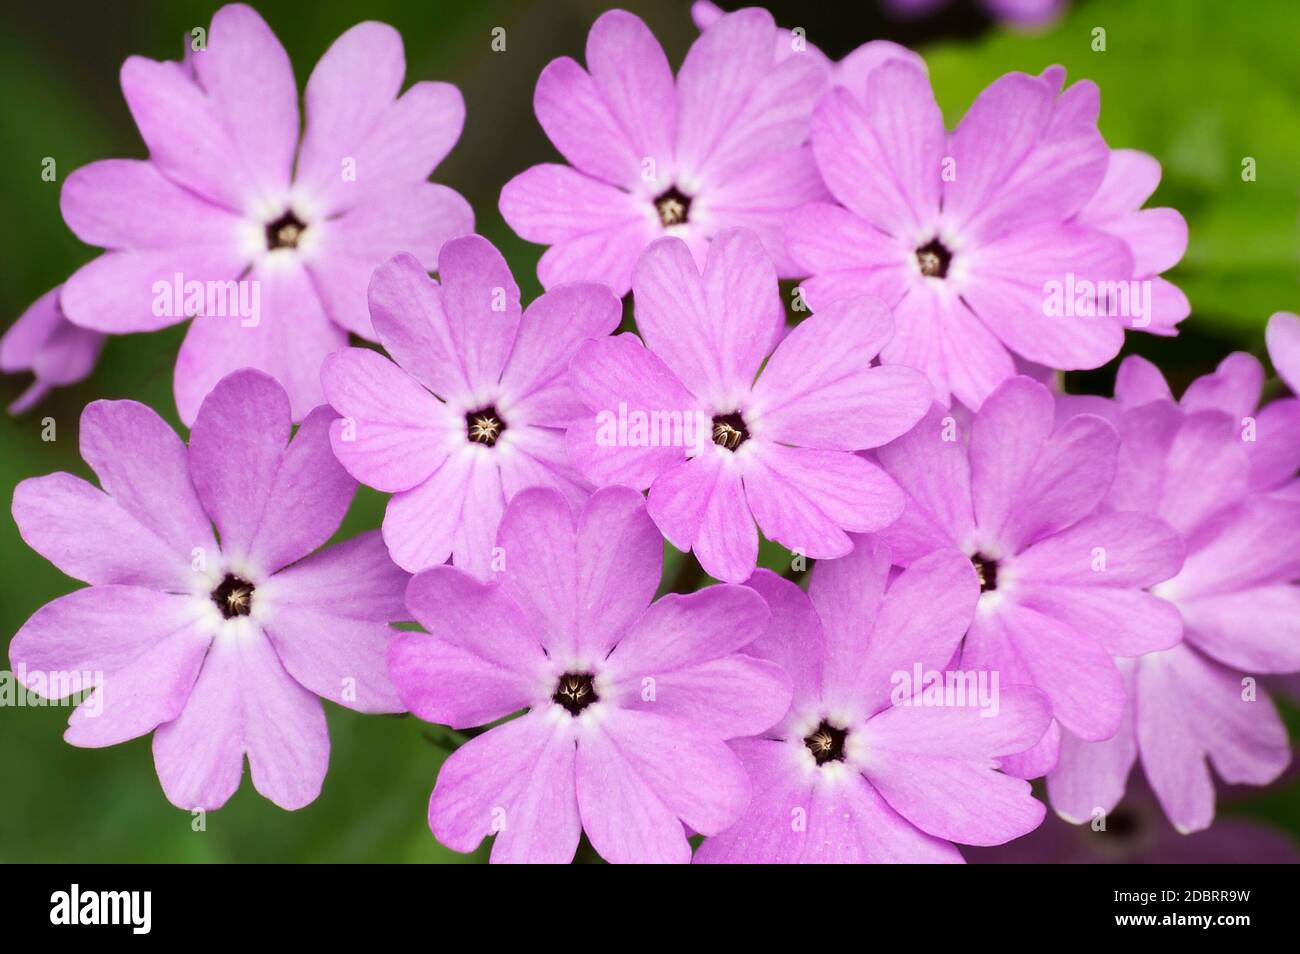 Japanese primrose (Primula sieboldii). Called Asiatic primrose and Cortusoides primula also. Another scientific name is Primula patens. Stock Photo